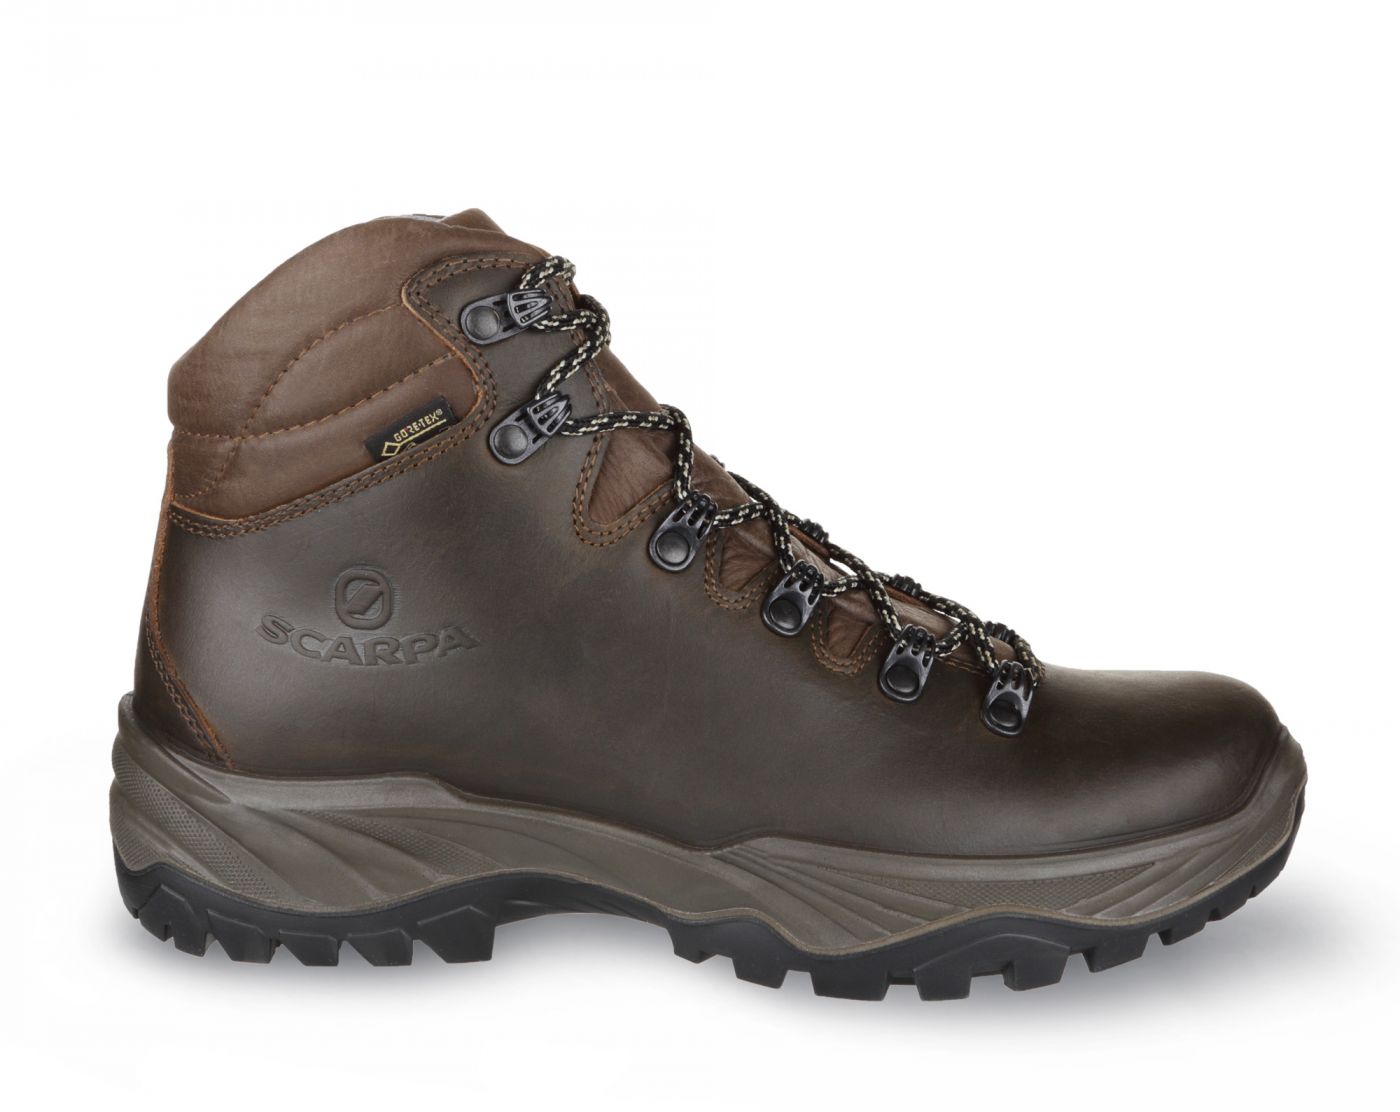 Scarpa Terra GTX Wmn - Hiking Boots - Women's